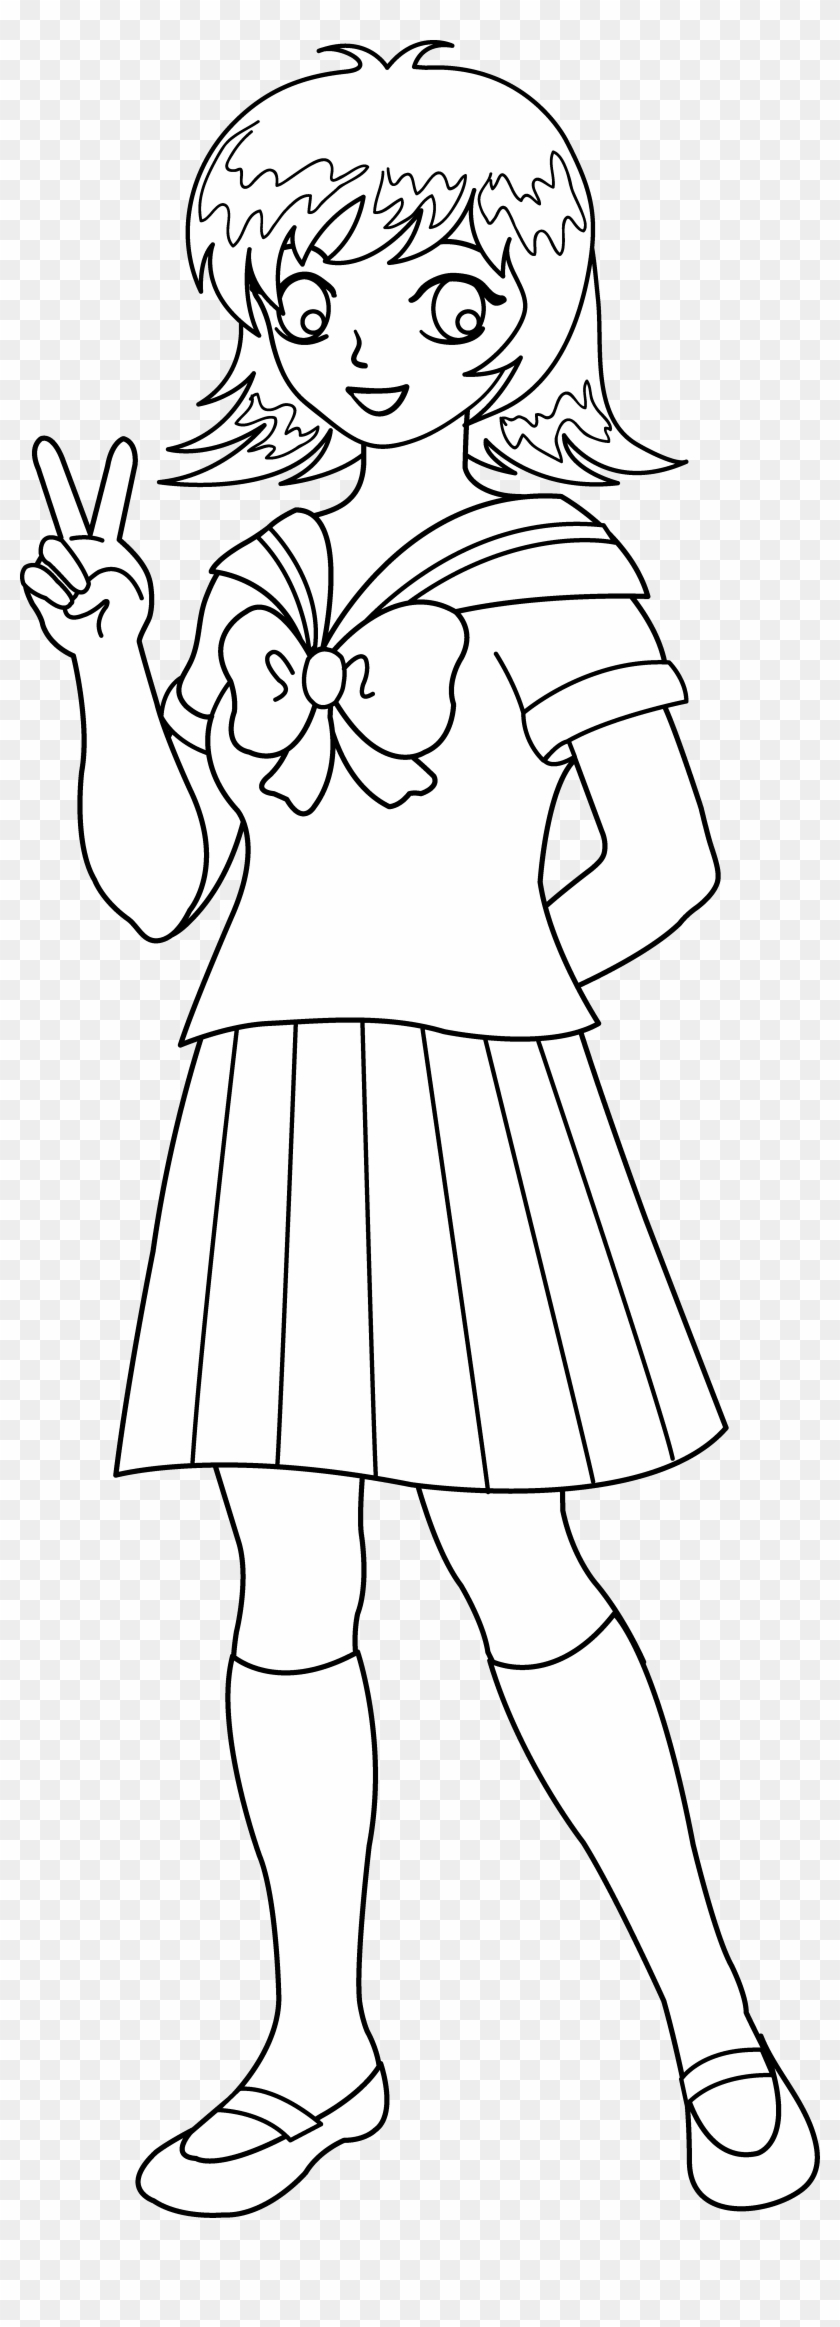 Png Clipart Anime School - Illustration Transparent Png #5535370